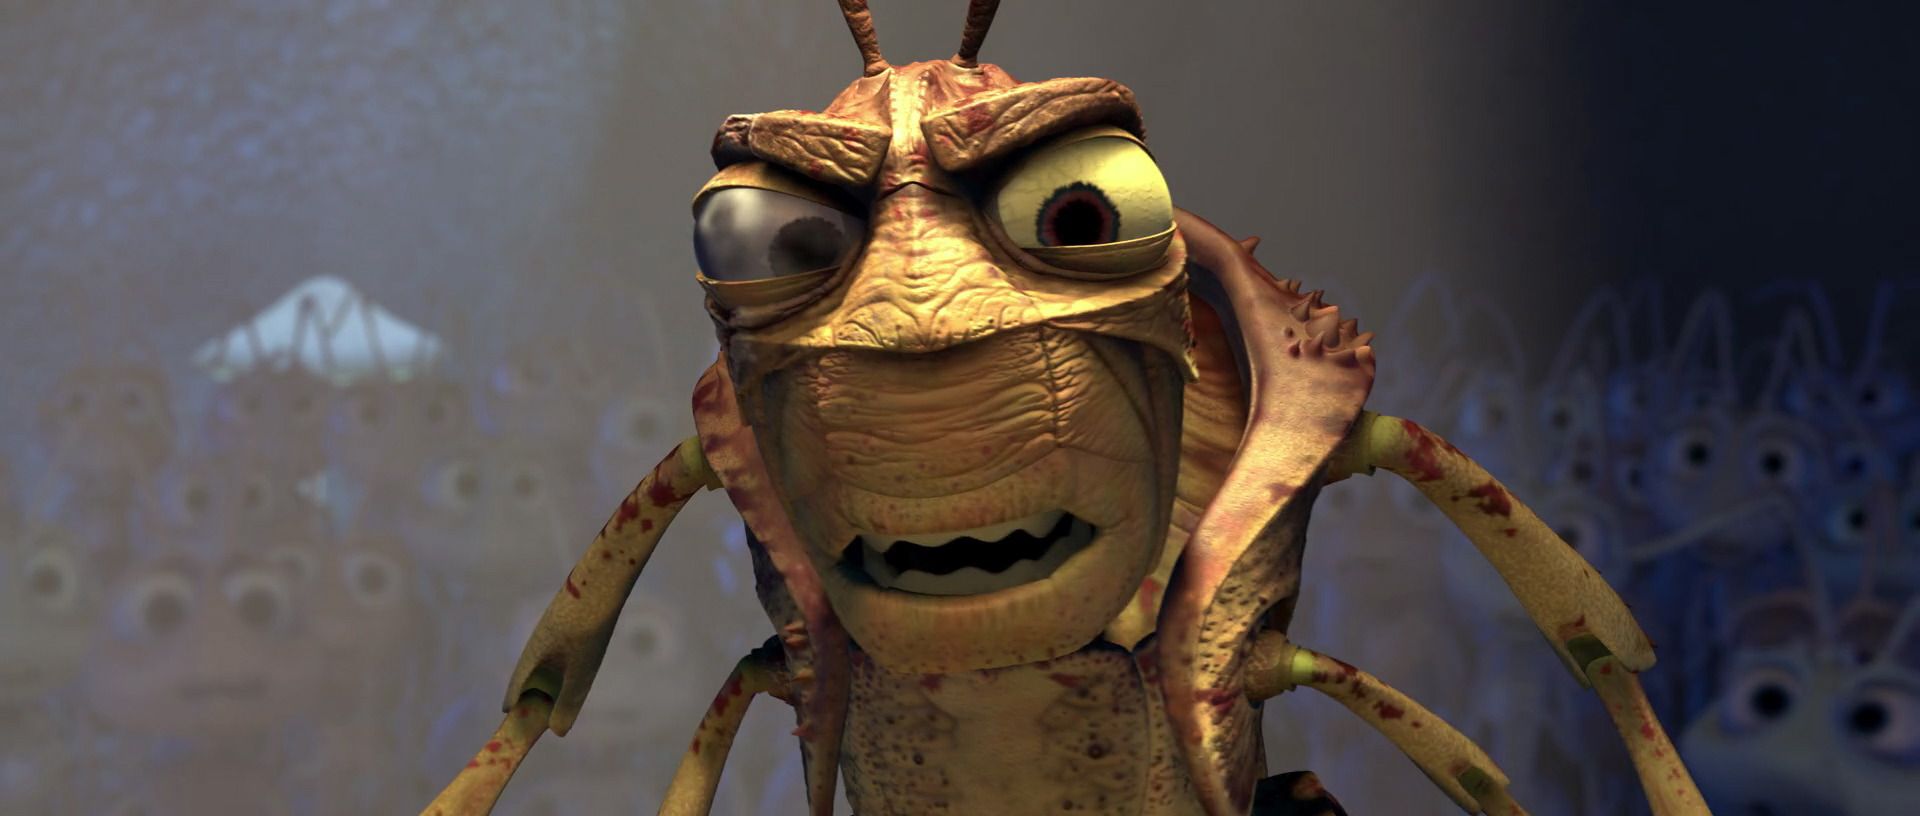 Hoppe from Pixar's A Bug's Life